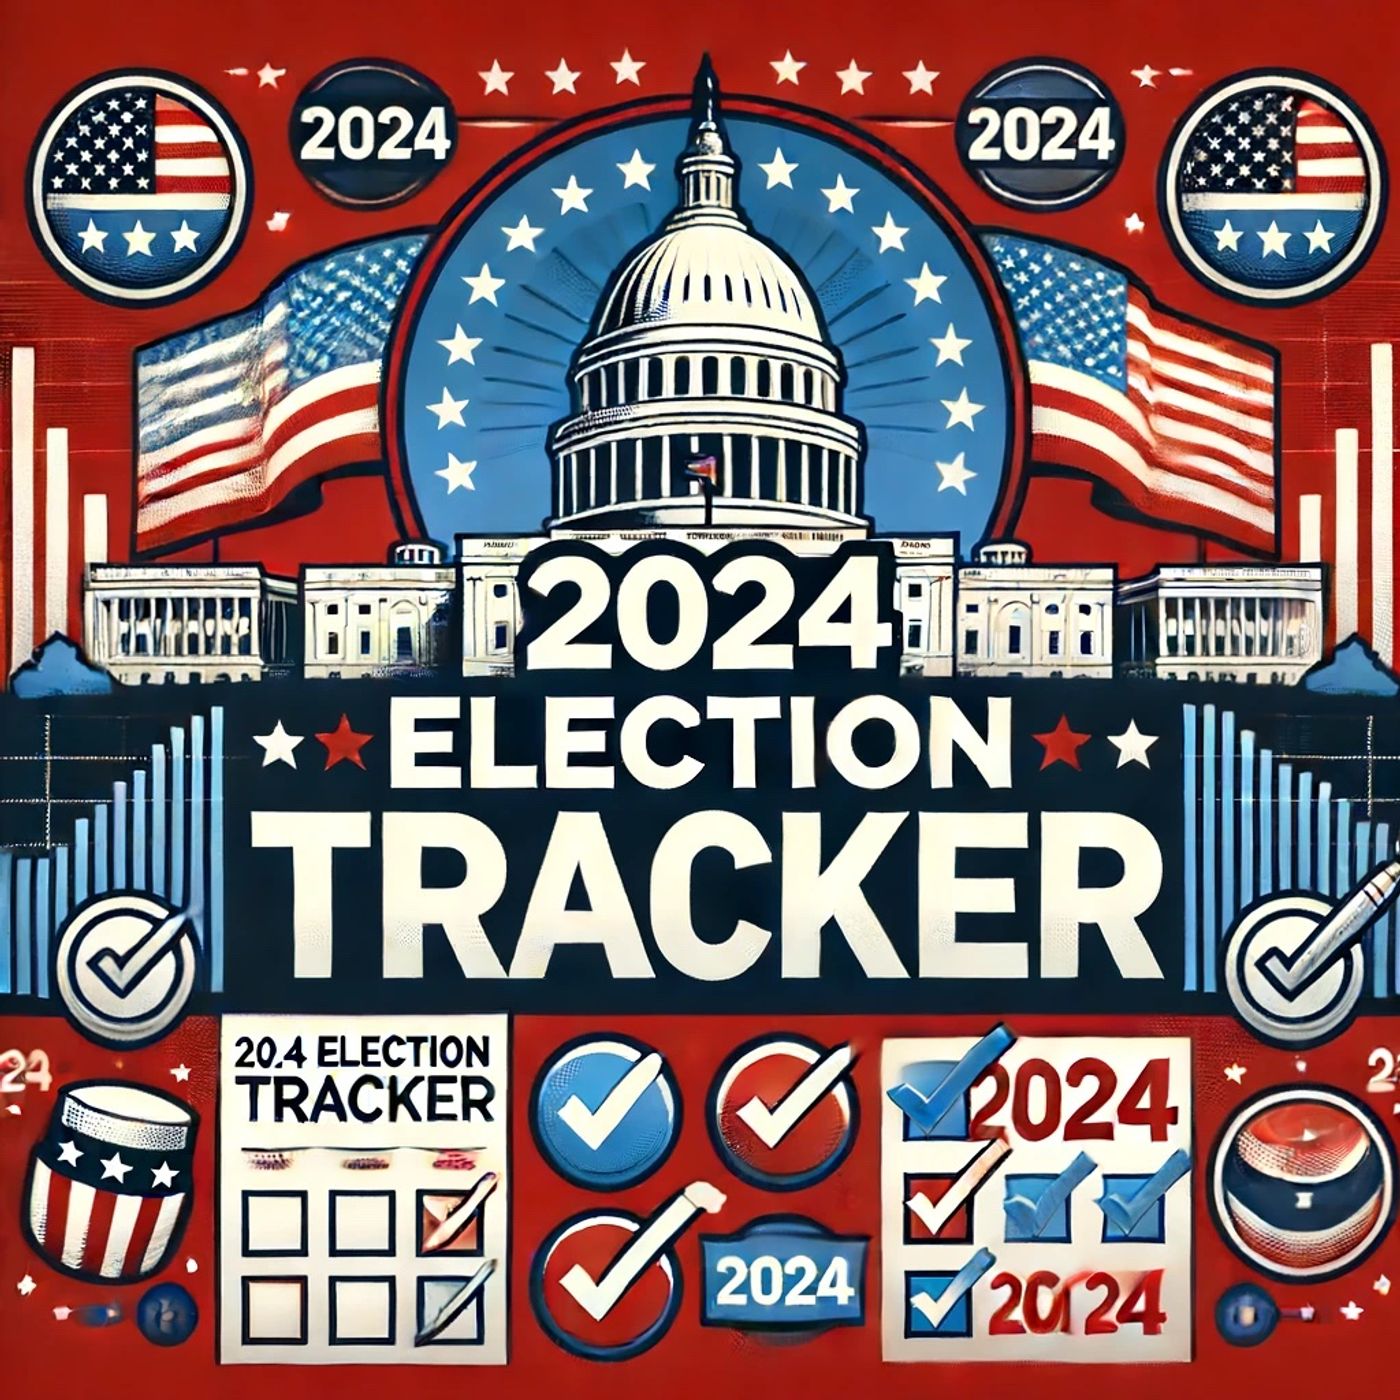 2024 Election Tracker - US President Image